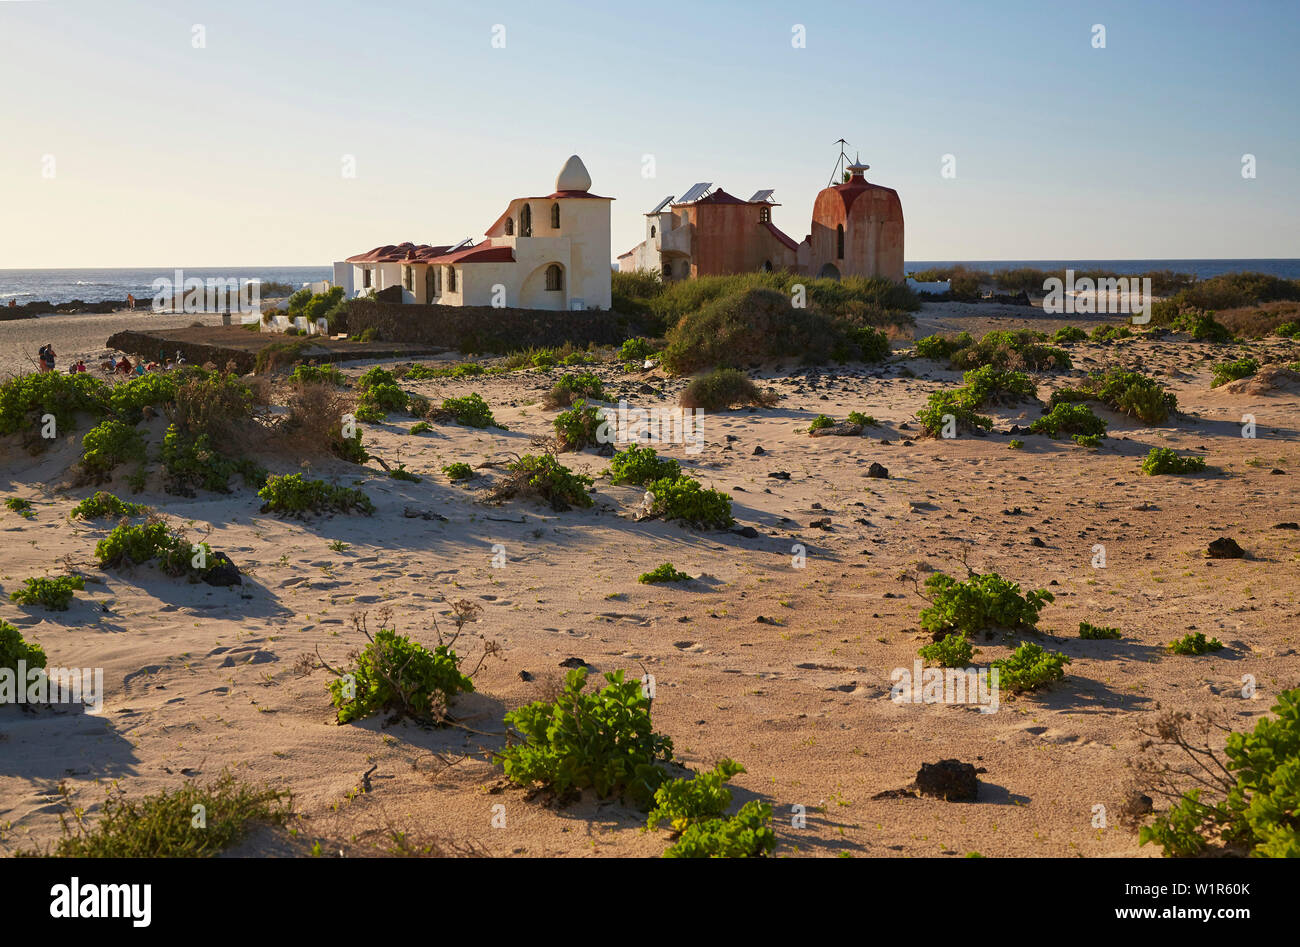 Casa di architettura inusuale a El Cotillo Beach, Fuerteventura, Isole Canarie, Islas Canarias, Oceano Atlantico, Spagna, Europa Foto Stock